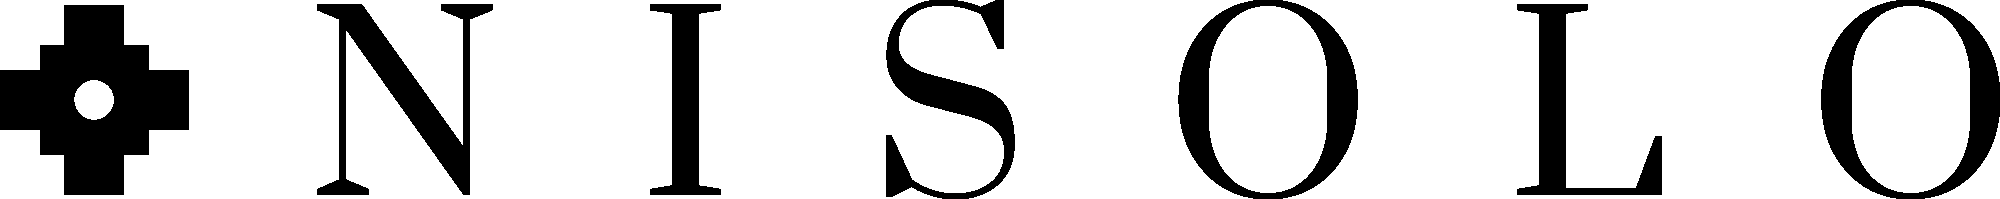 Black Logo - Nisolo Shoes Logo (2000x199)